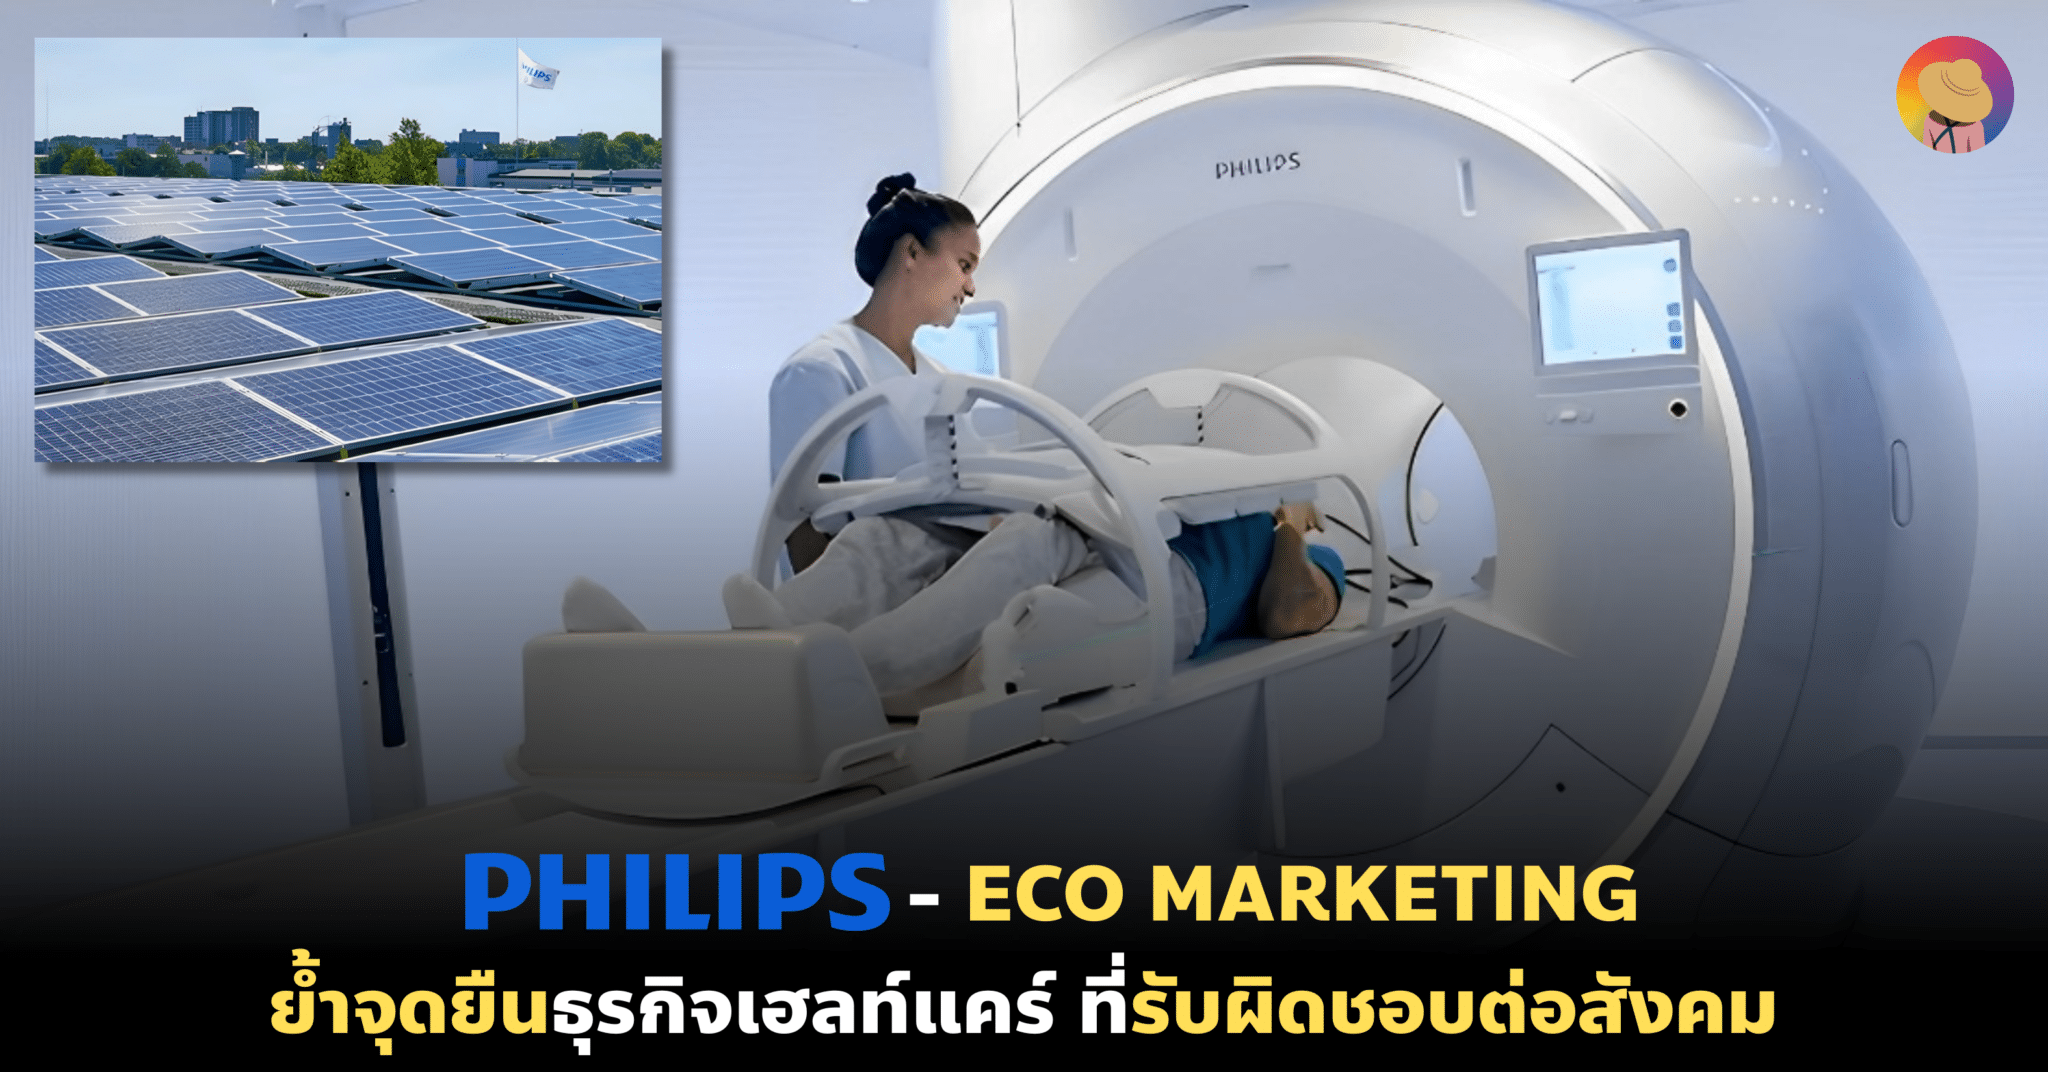 Philips – Eco Marketing ย้ำจุดยืนธุรกิจเฮลท์แคร์ ที่รับผิดชอบต่อสังคม